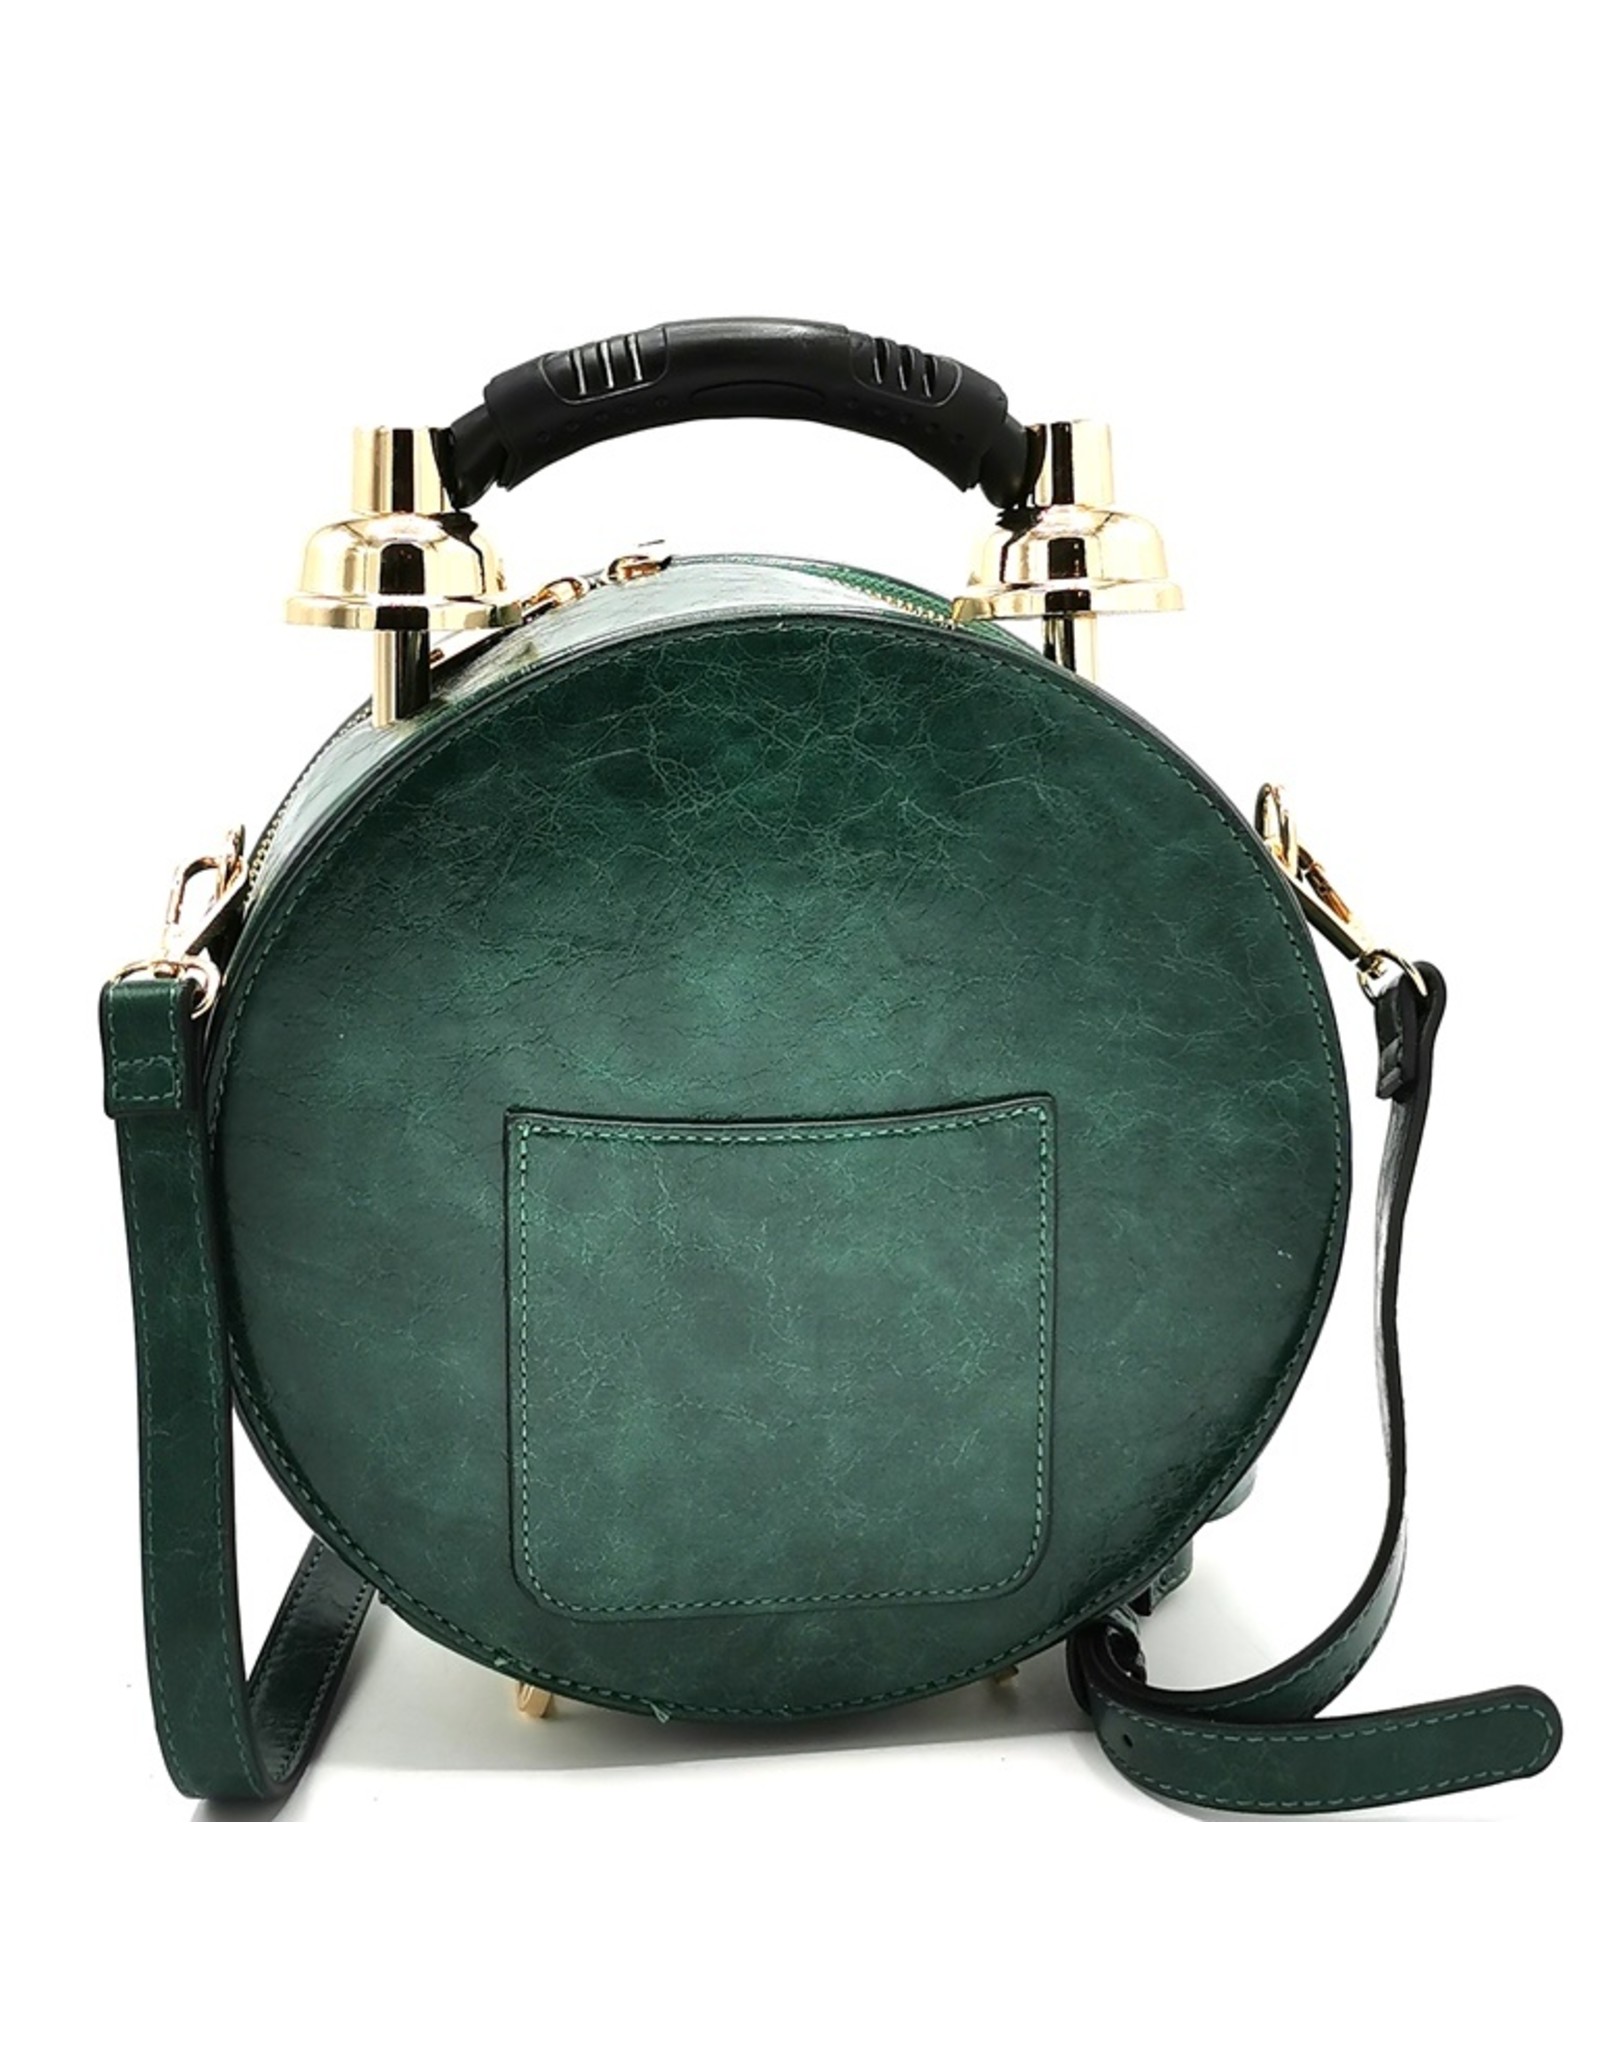 Magic Bags Steampunk bags Gothic bags - Clock Handbag with Real Clock green (medium)